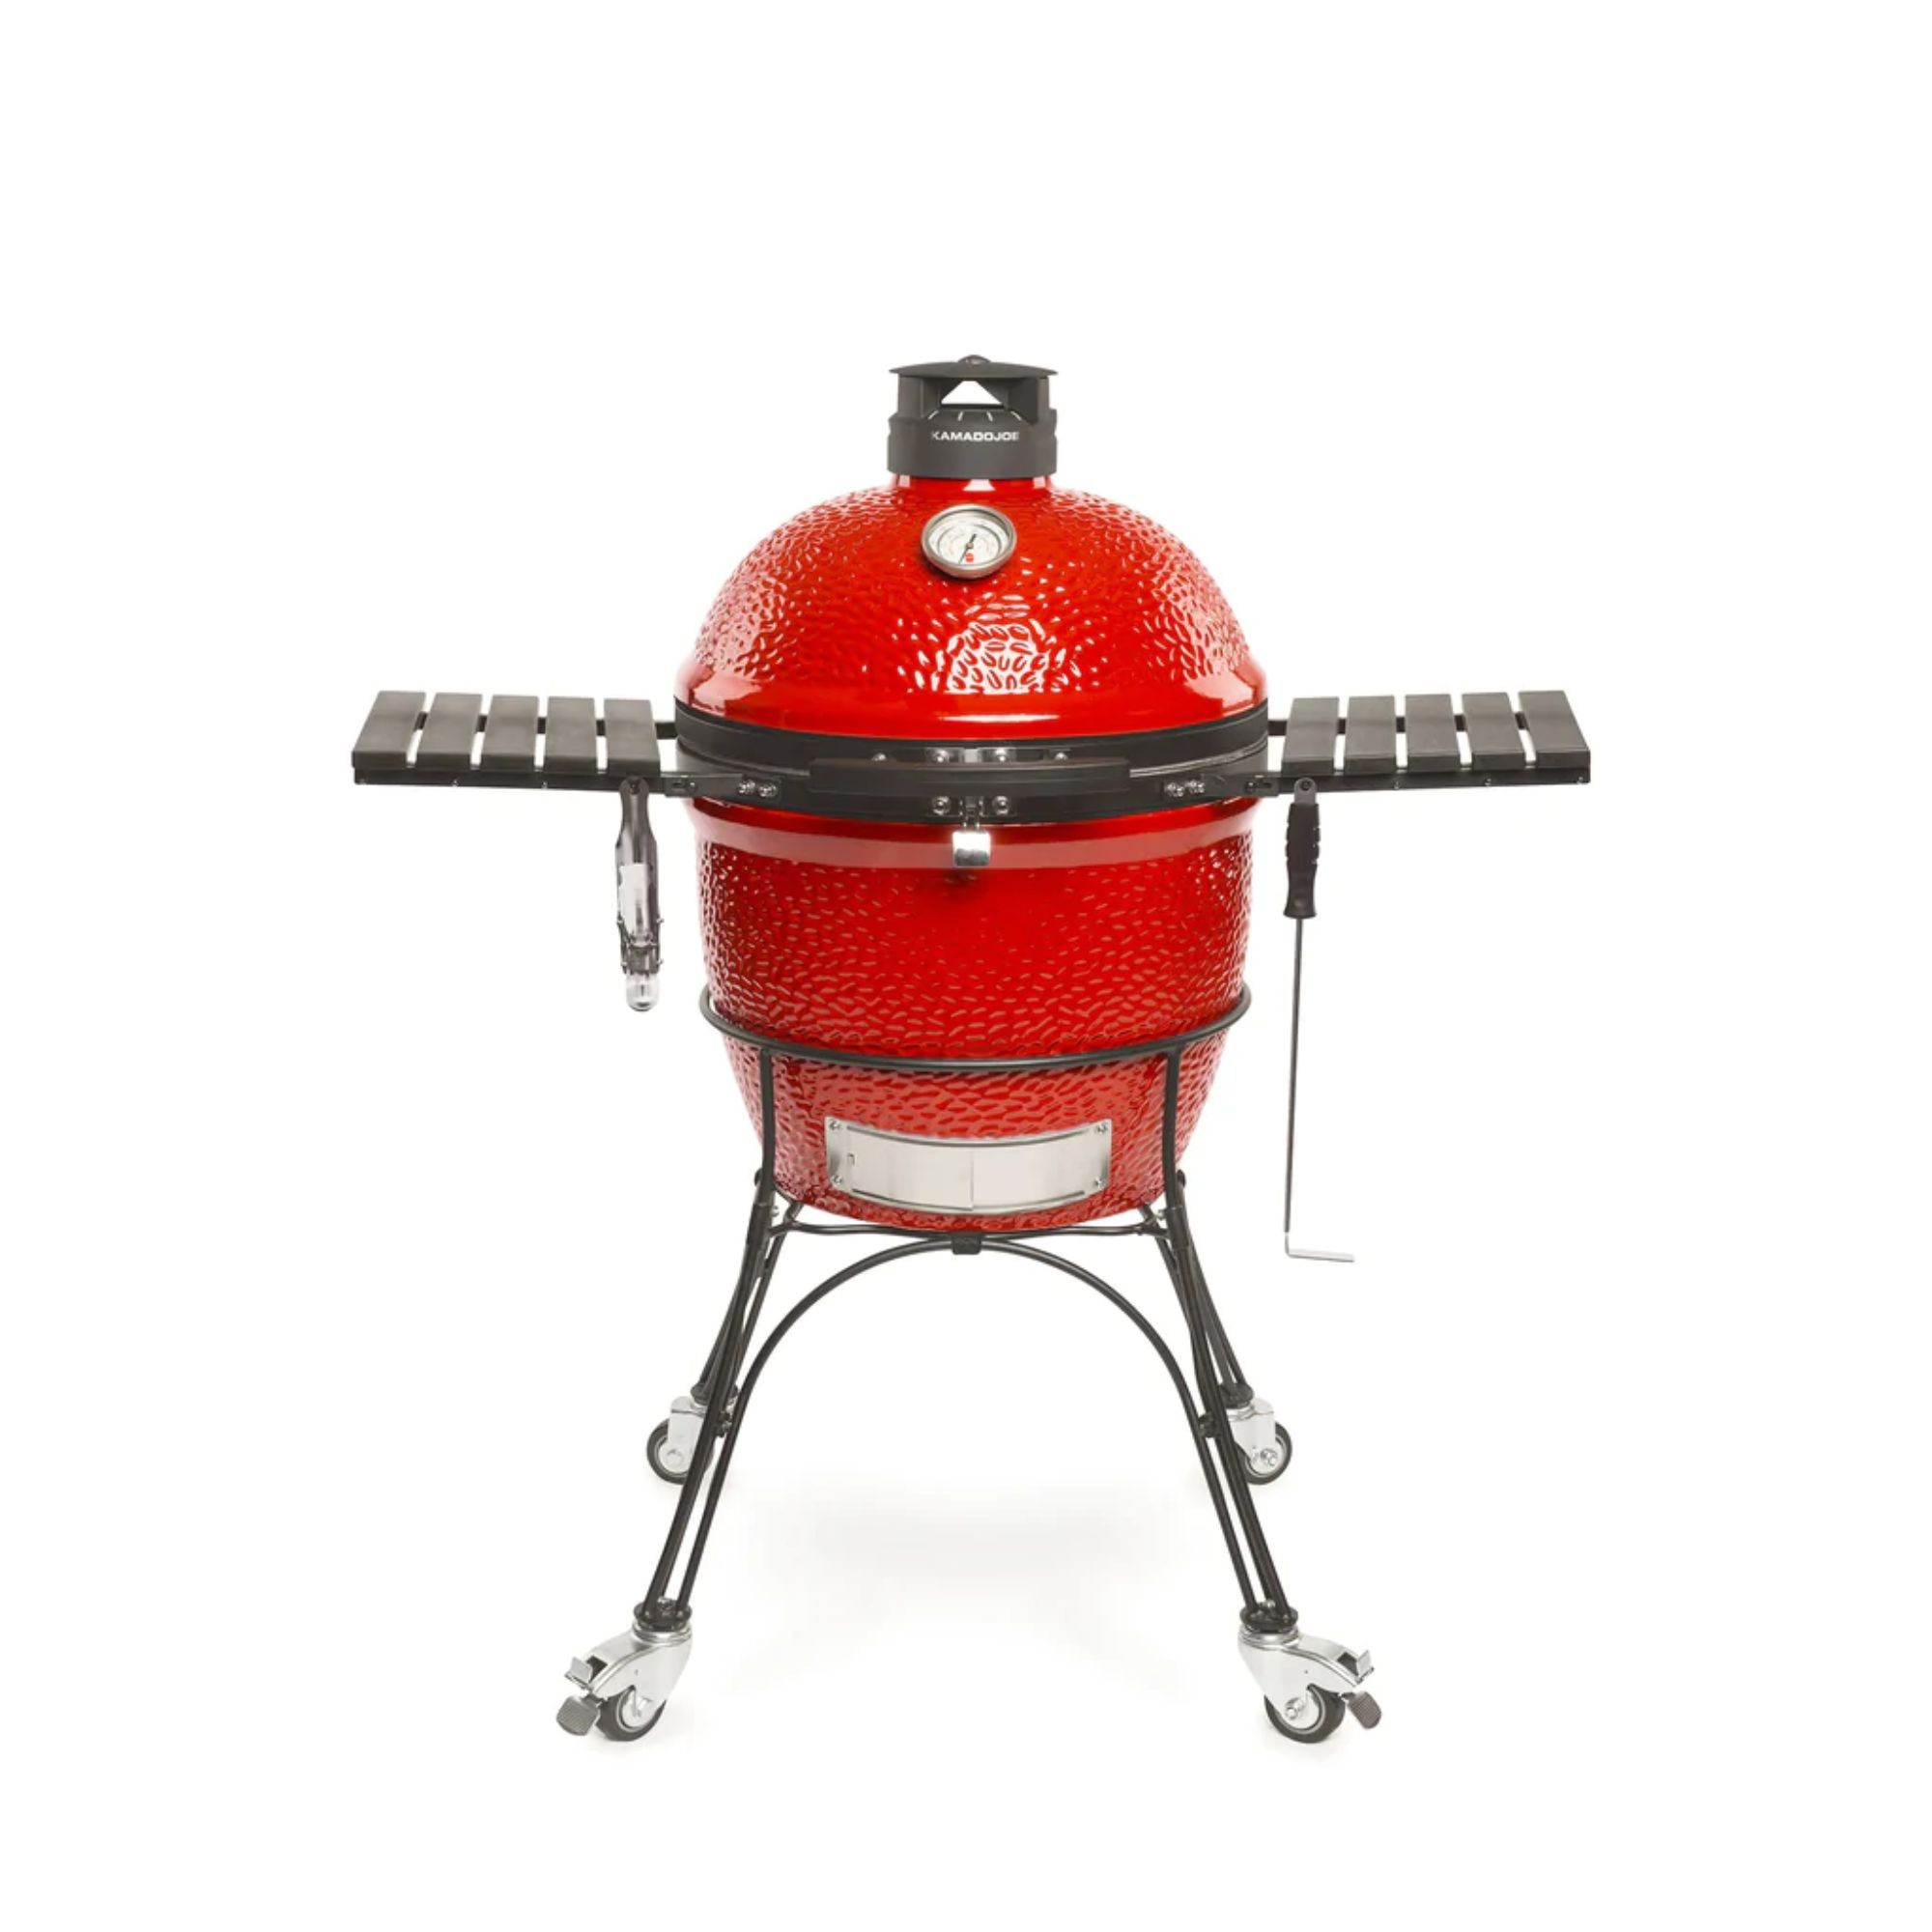 A red Kamado Joe II grill on a white background